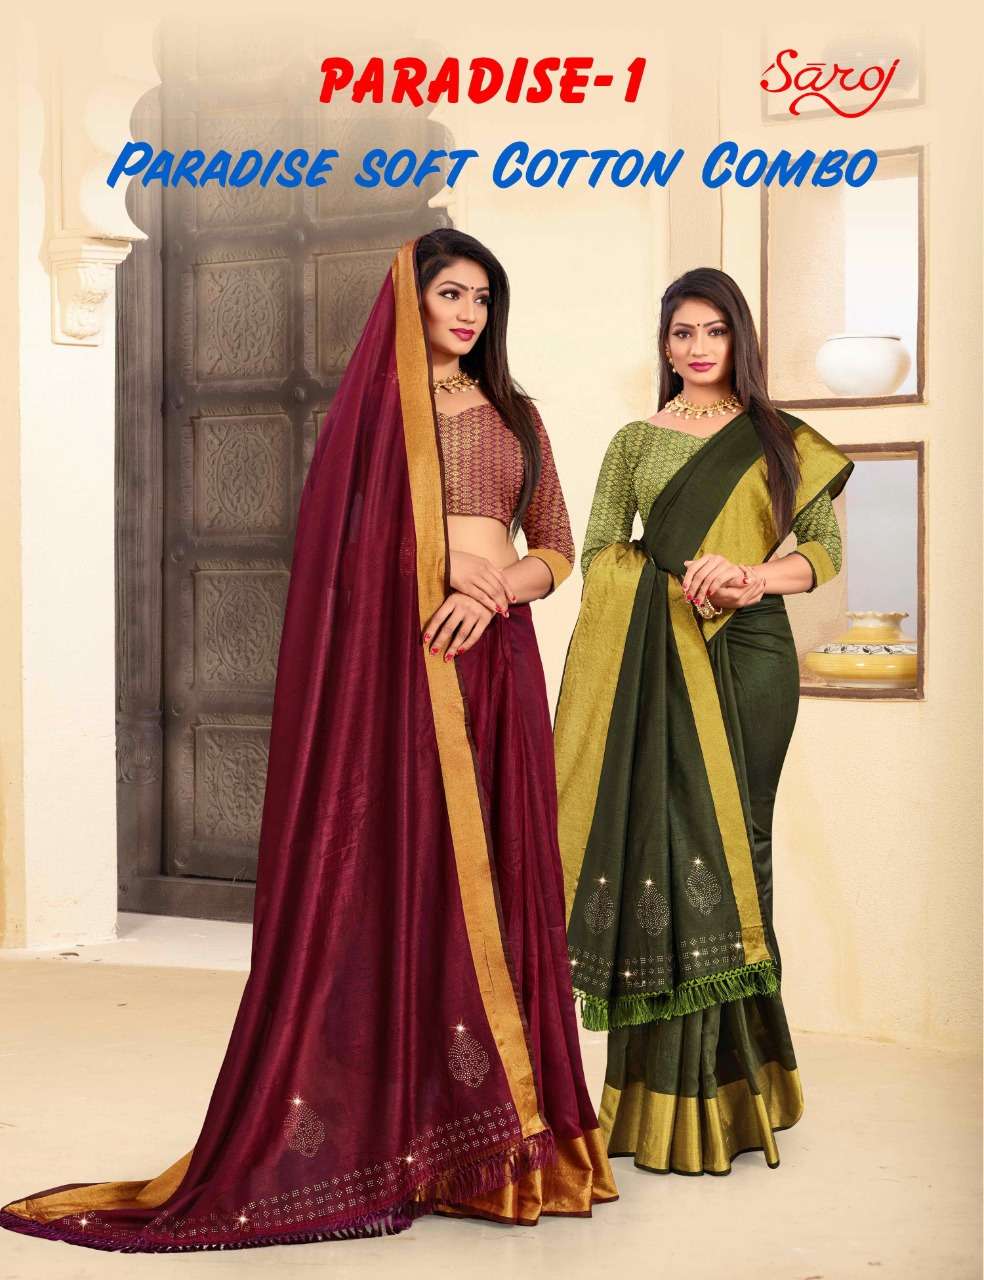 Saroj paradise vol 1 soft cotton fancy sarees collection at krishna creation